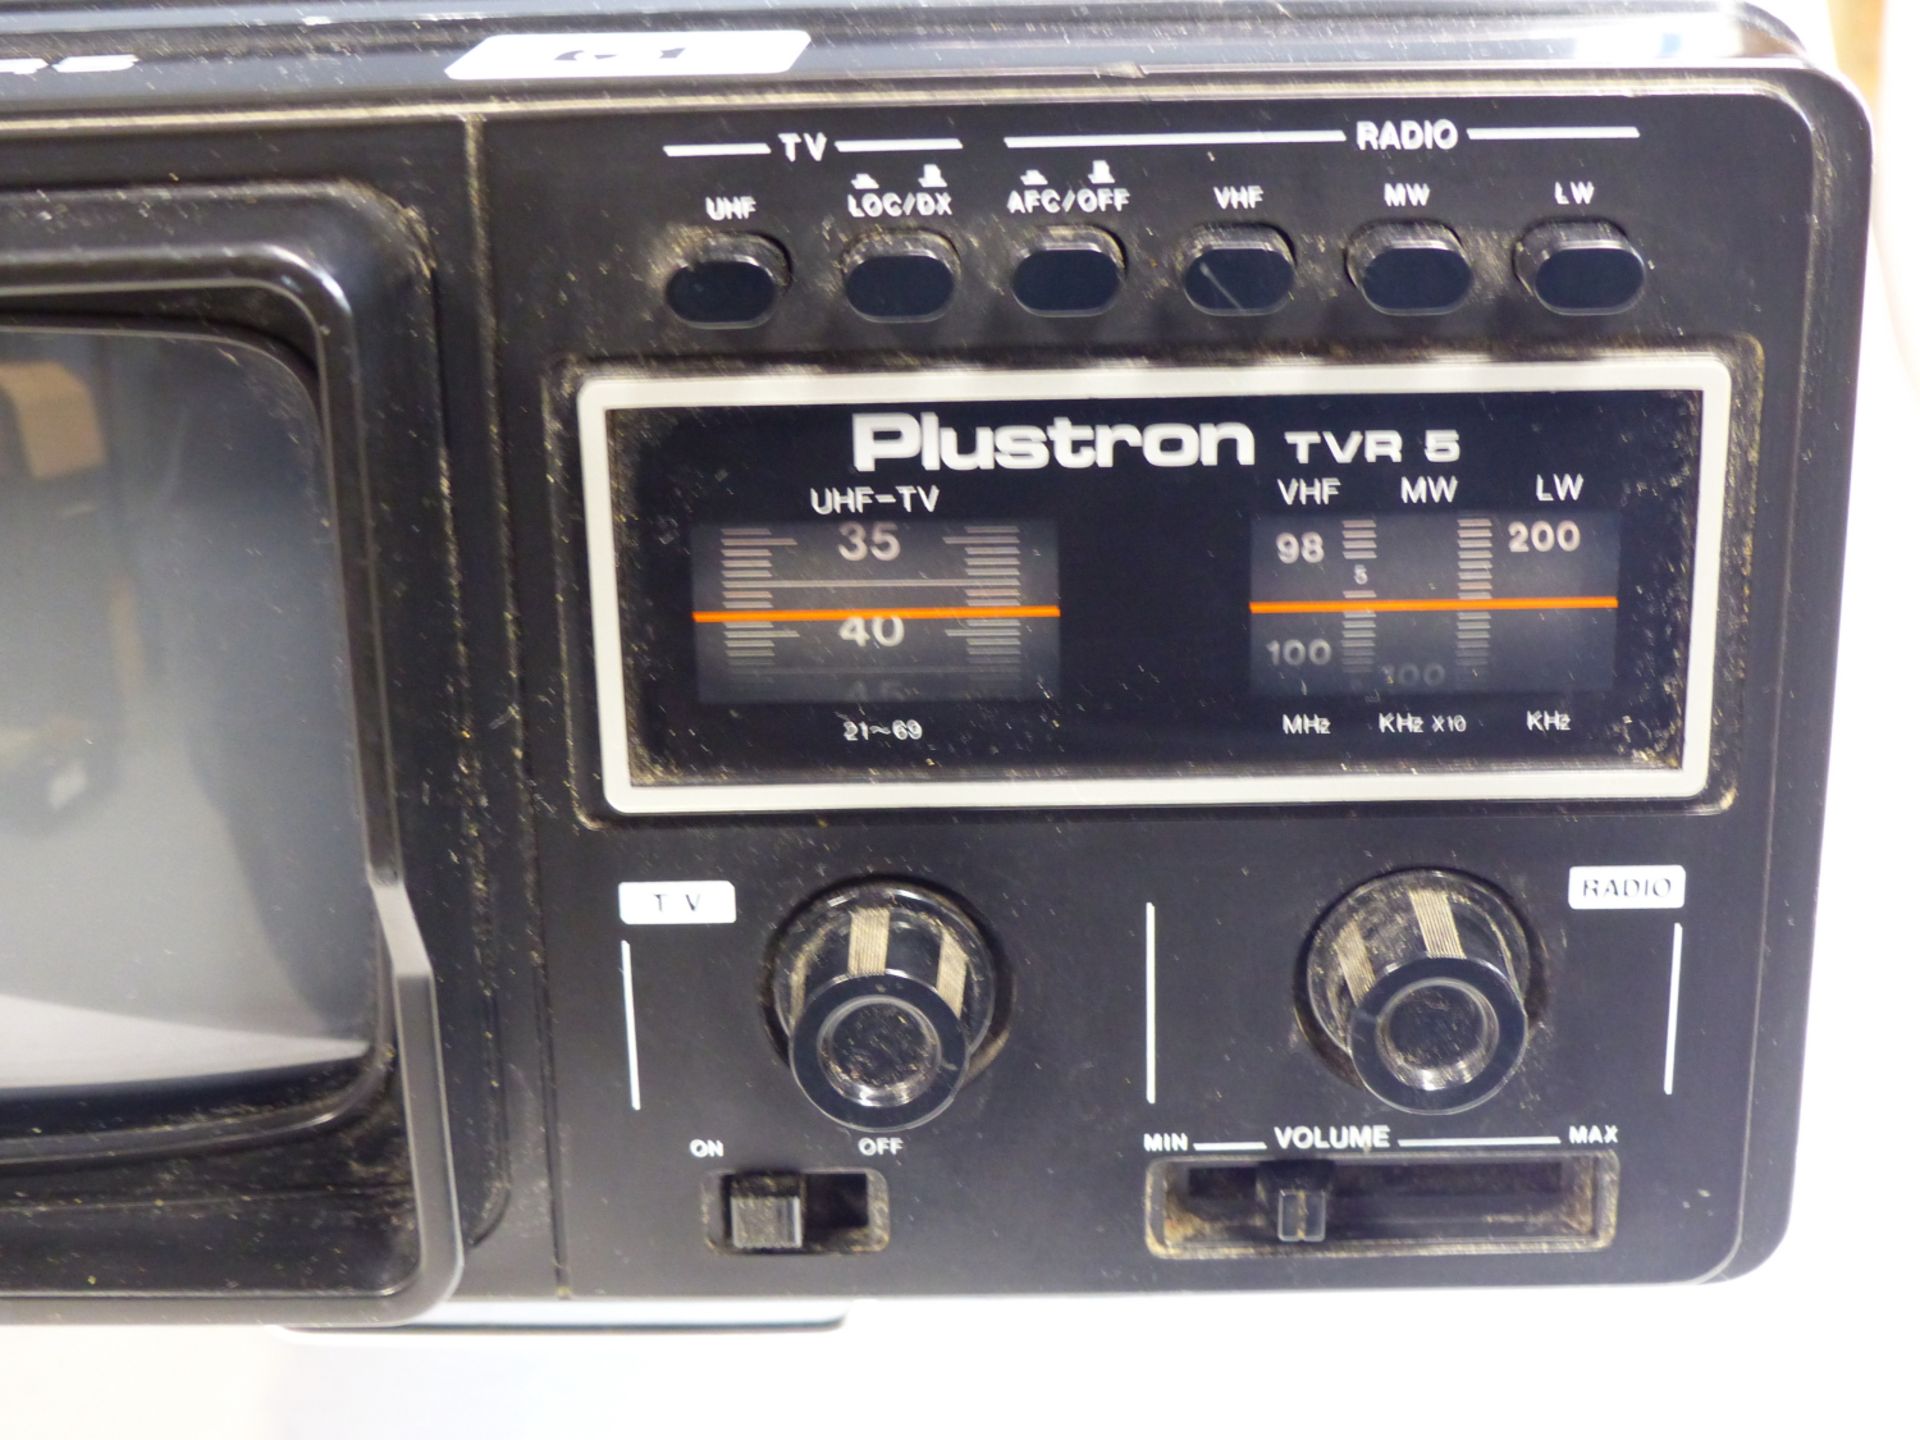 A RETRO VINTAGE PLUSTRON TVR 5 PORTABLE TV RADIO. - Image 4 of 5